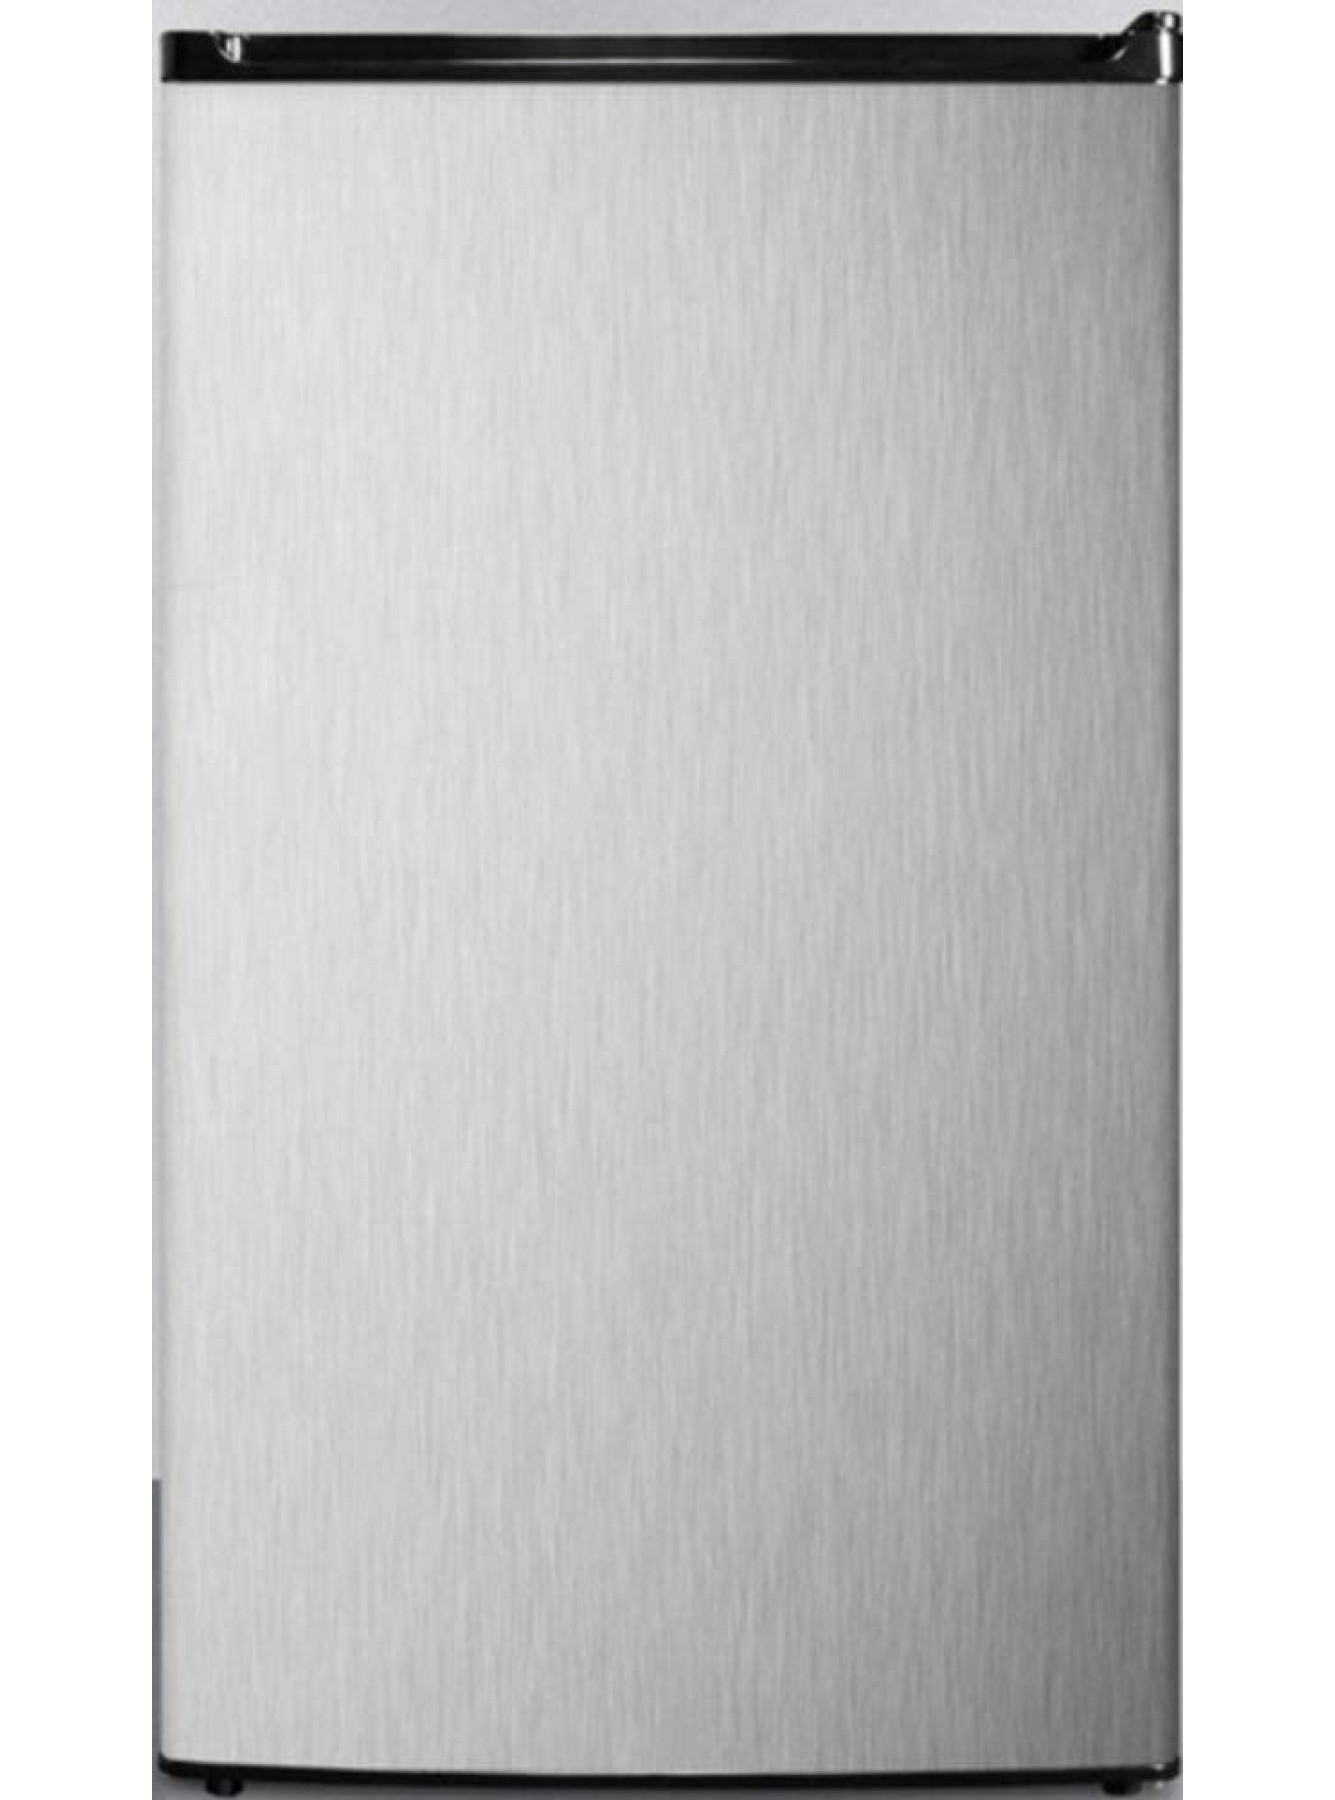 FF433ESSSADA 19 Freestanding Compact Refrigerator-Freezer with 3.6 Cu. Ft. Capacity ADA Compliant Counter Height Automatic Defrost 2 Adjustable Shelves 3 Door Shelves and Crisper Drawer: Stainless Steel B01H3CDA1I